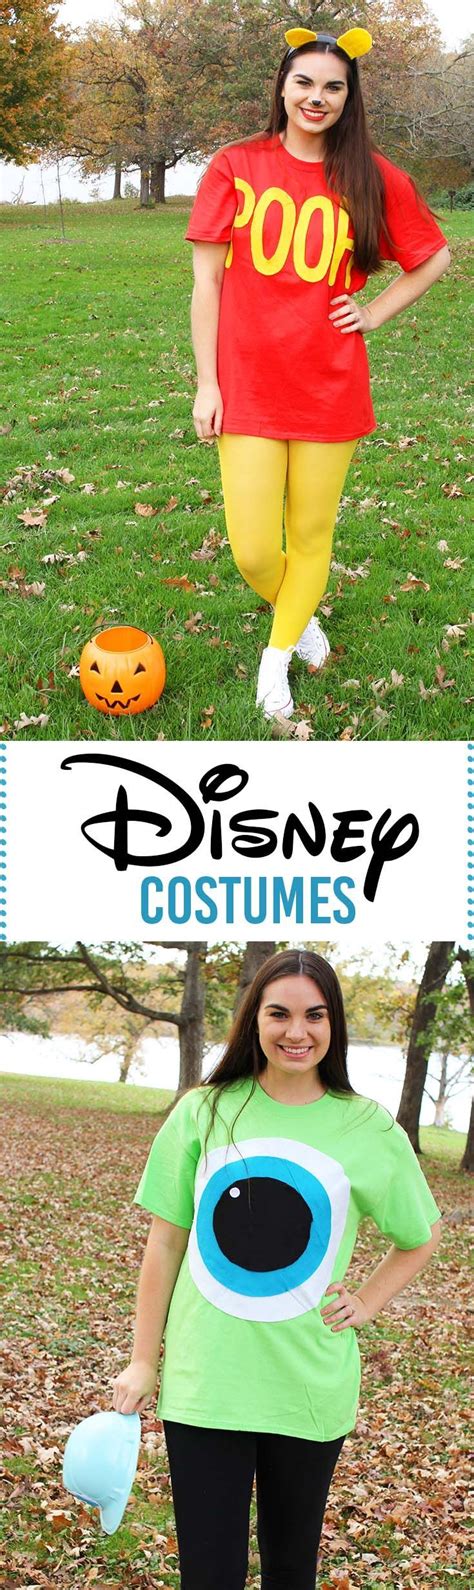 Diy Last Minute Disney Halloween Costumes Super Easy And Inexpensive